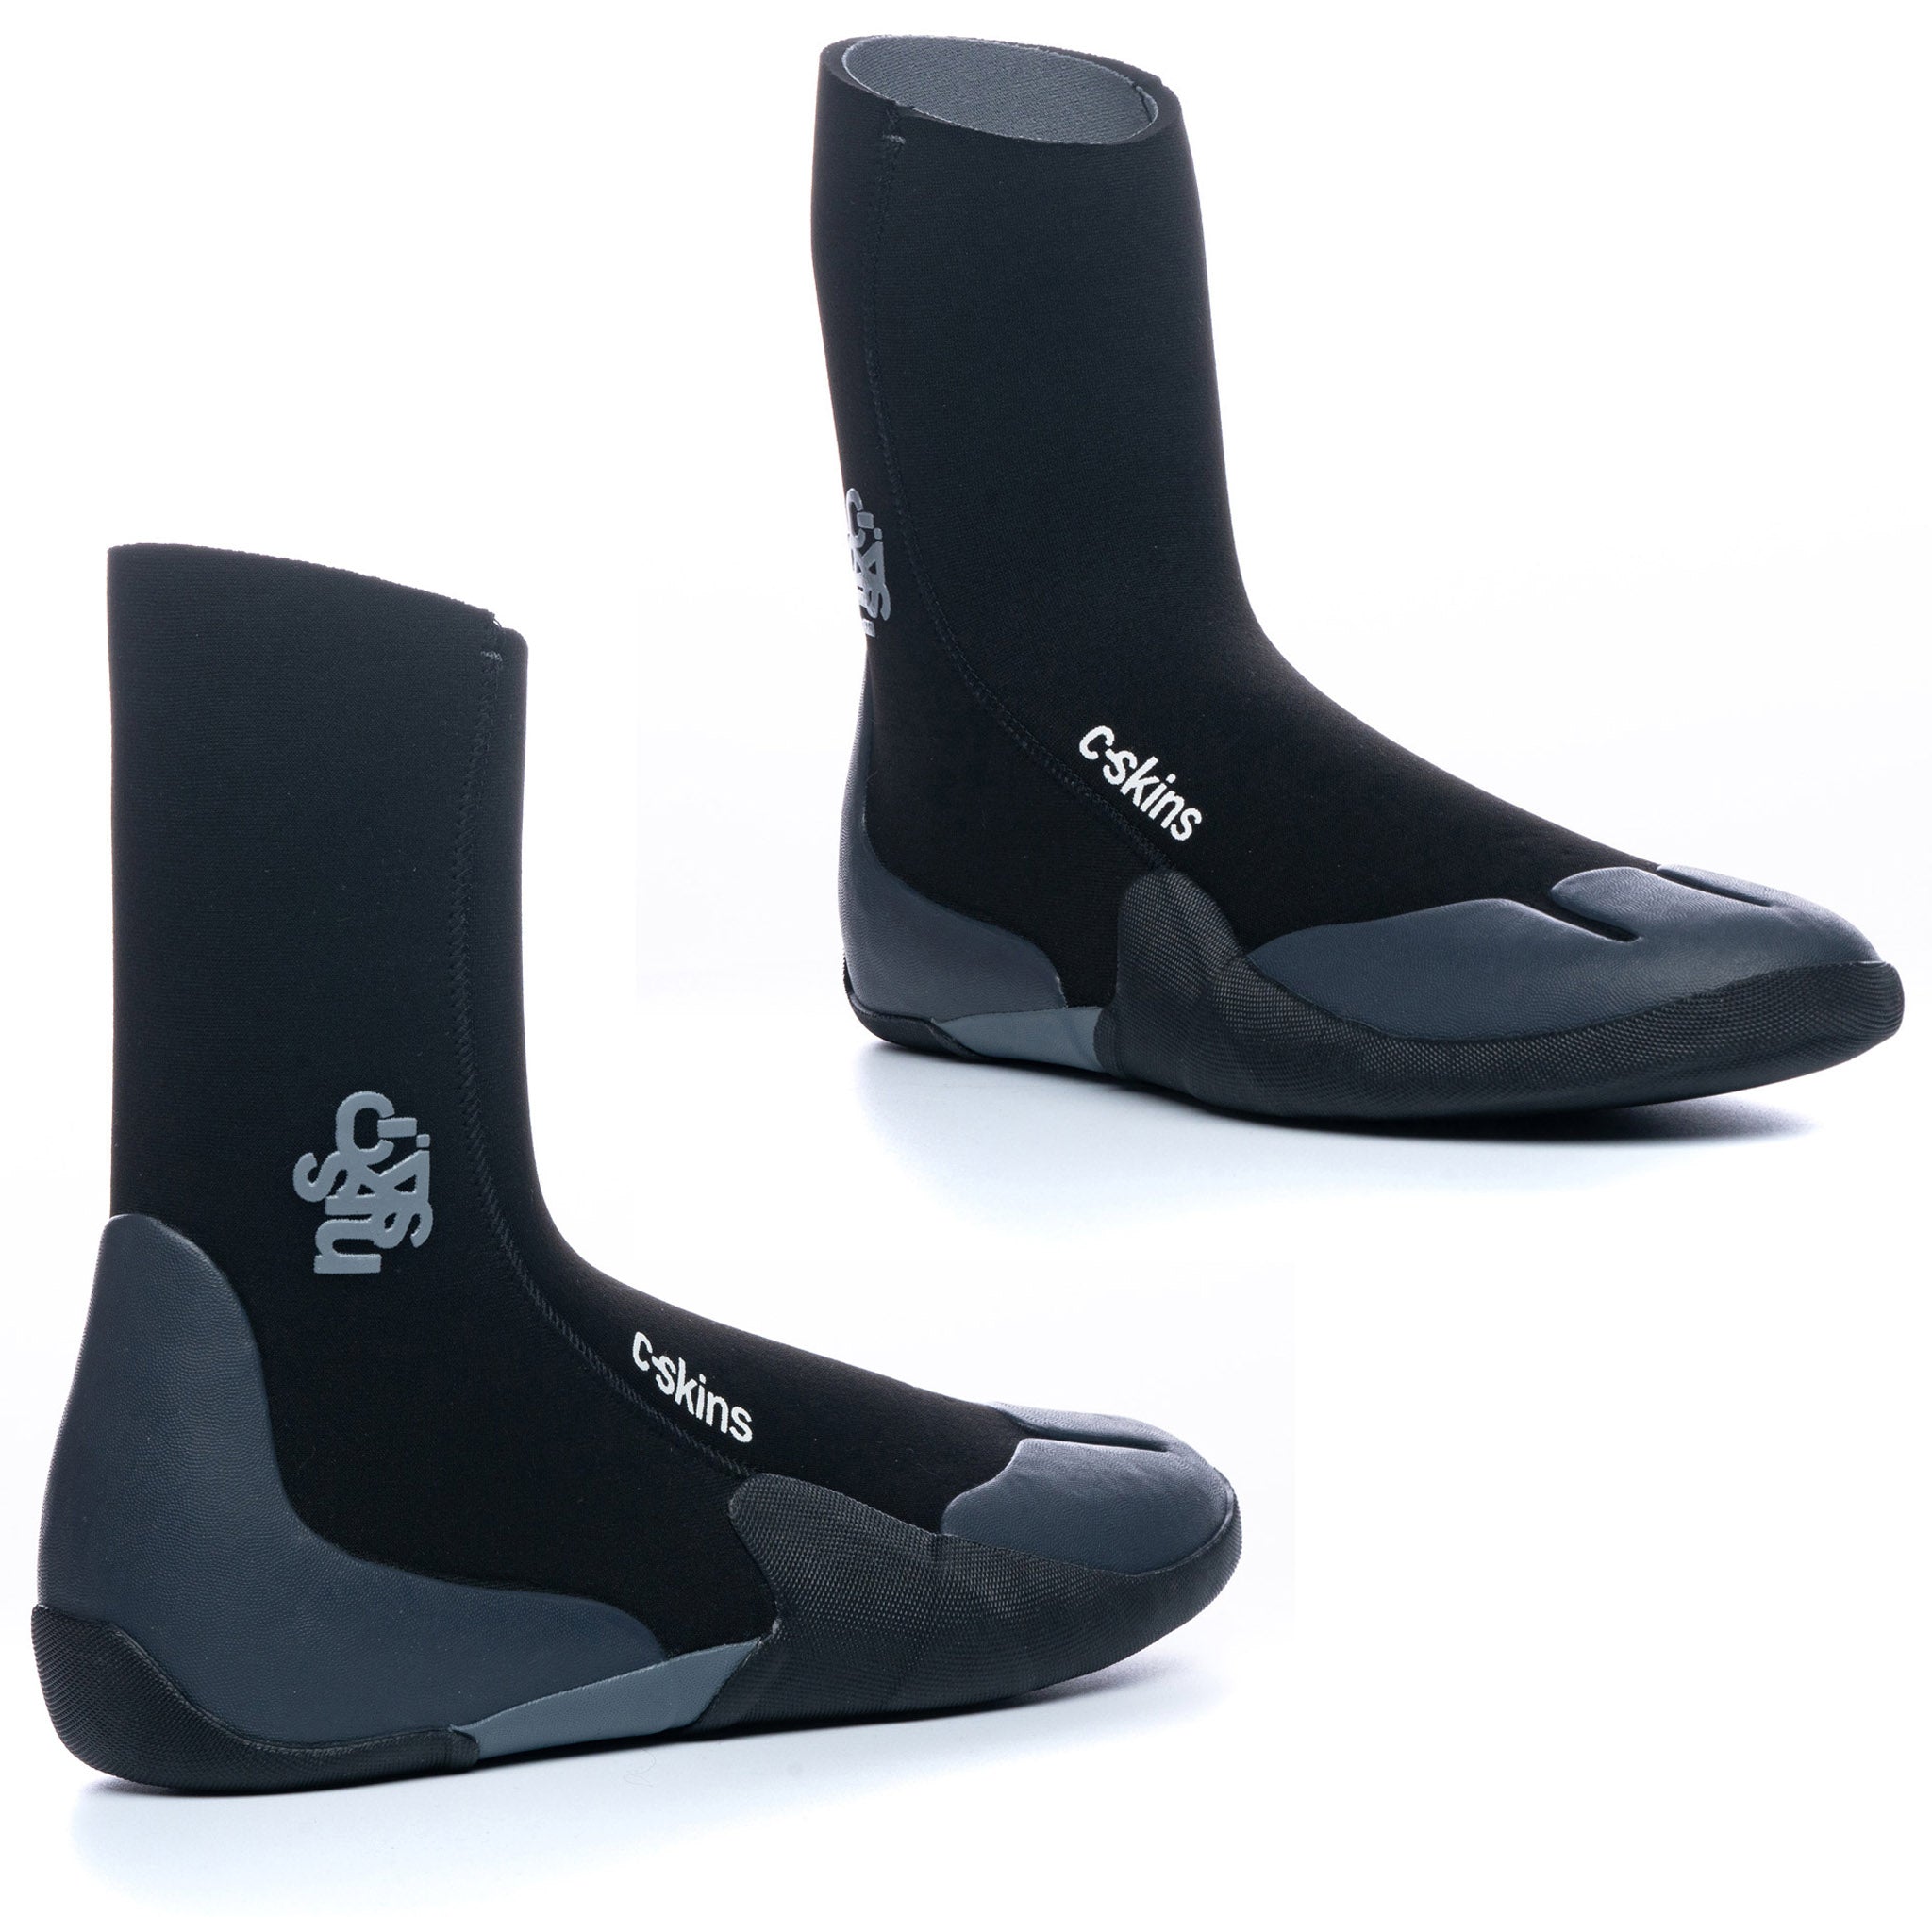 C-Skins Legend 5mm Neoprene Wetsuit Boots Toe and Heel protection